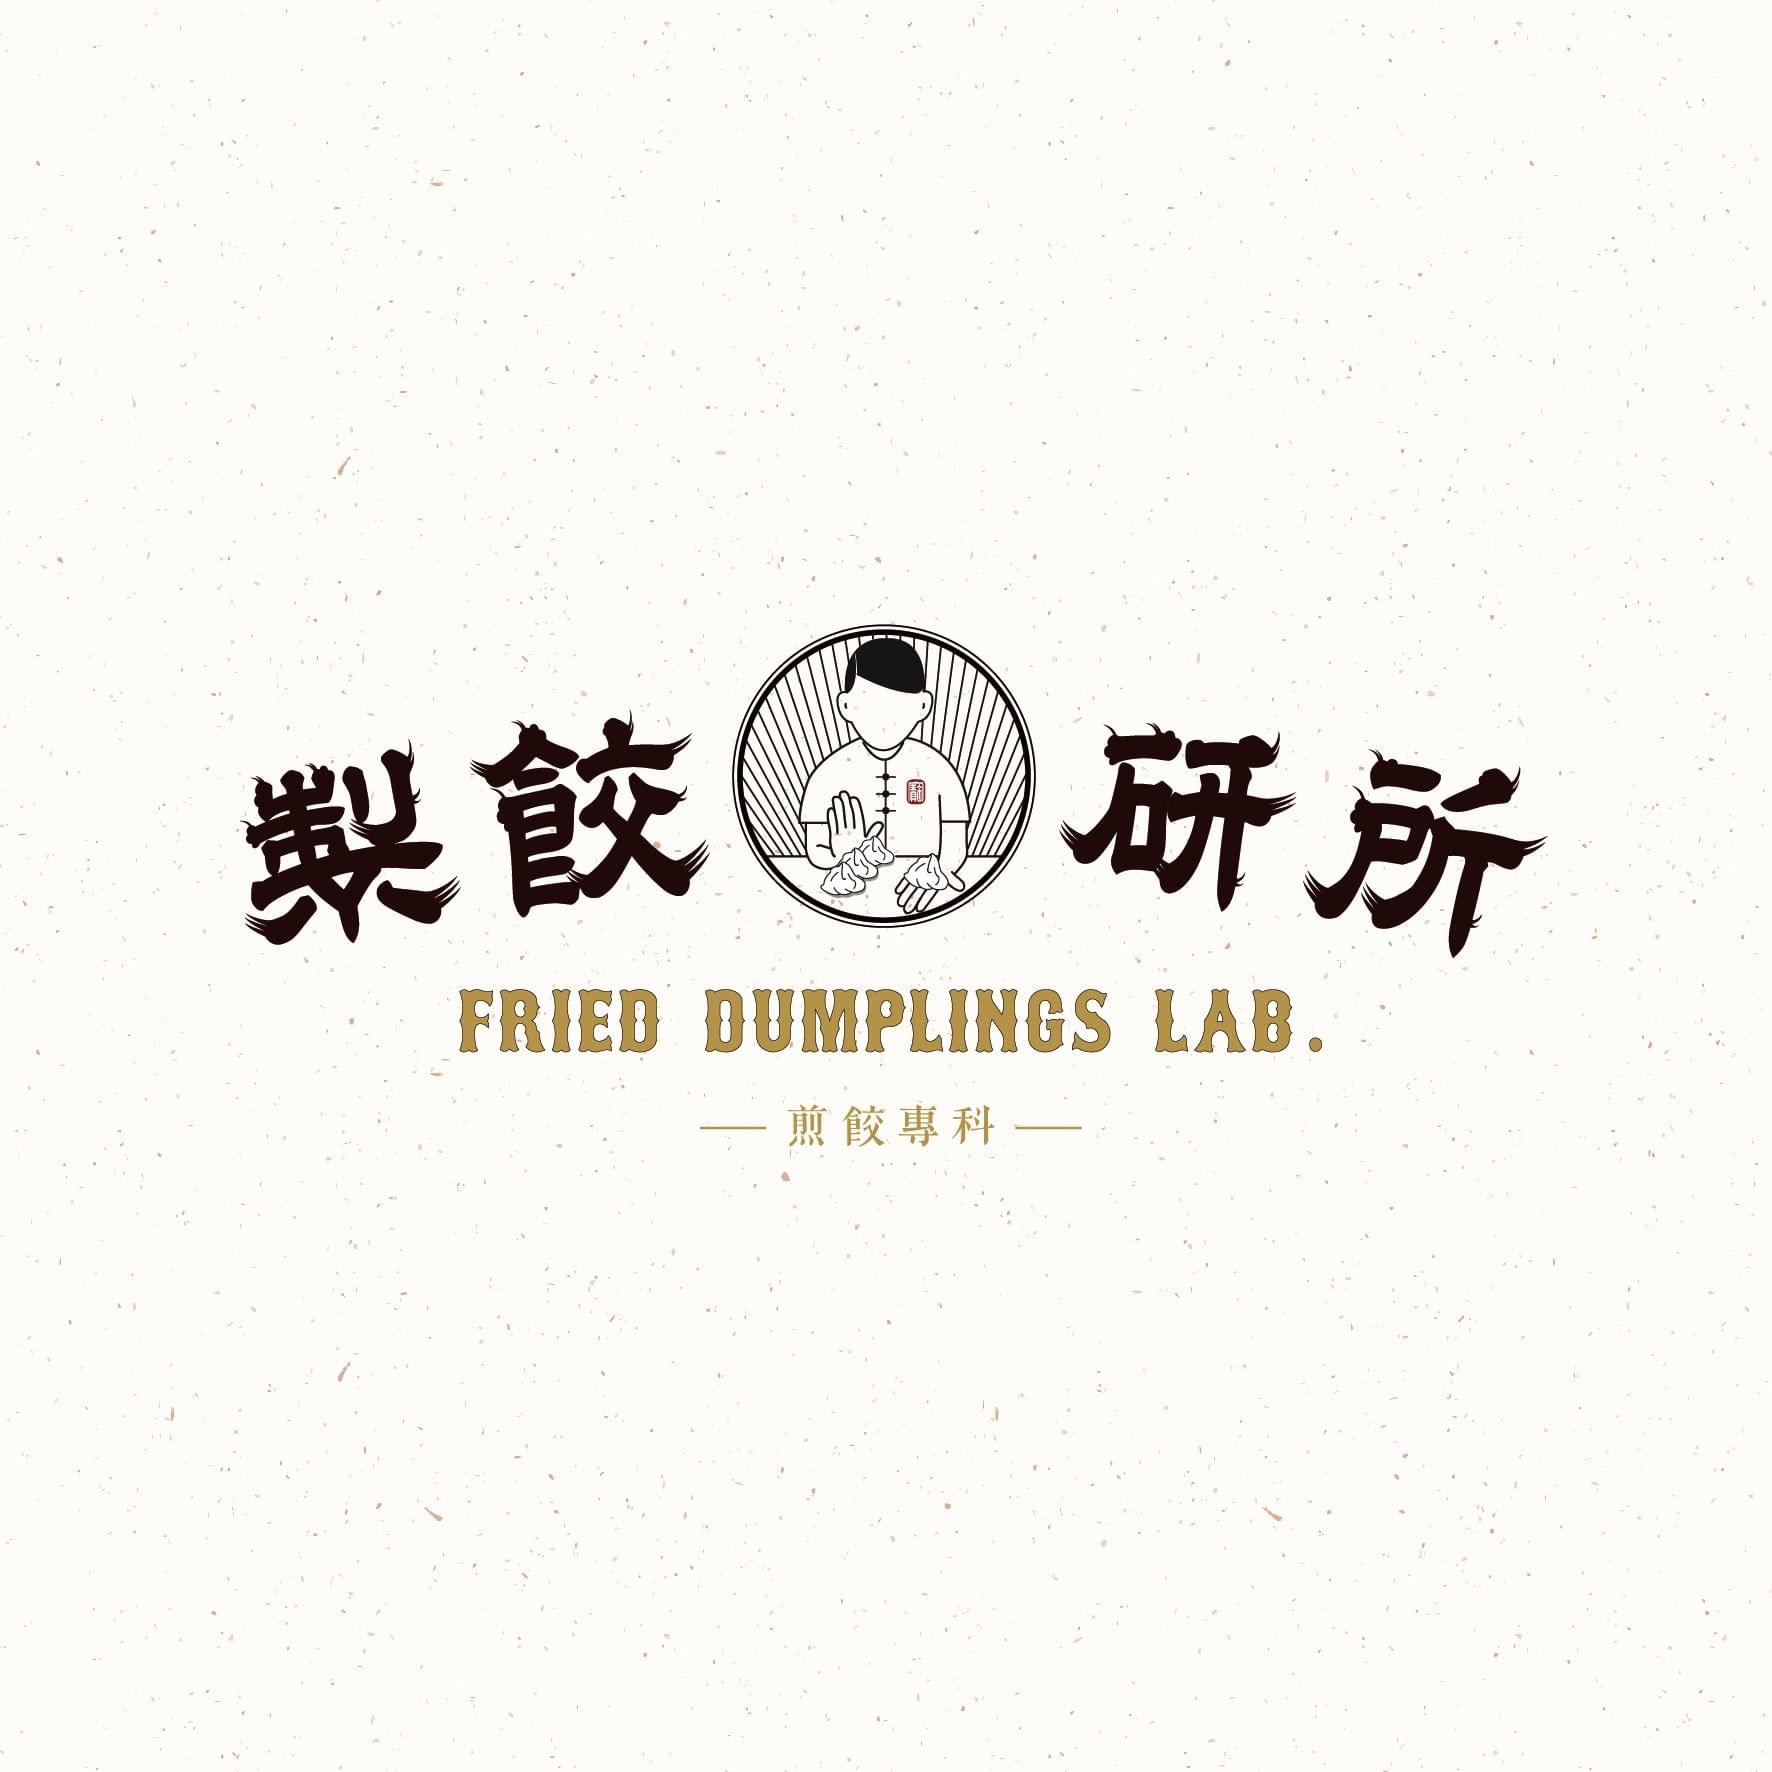 製餃研所 Dumpling Lab.